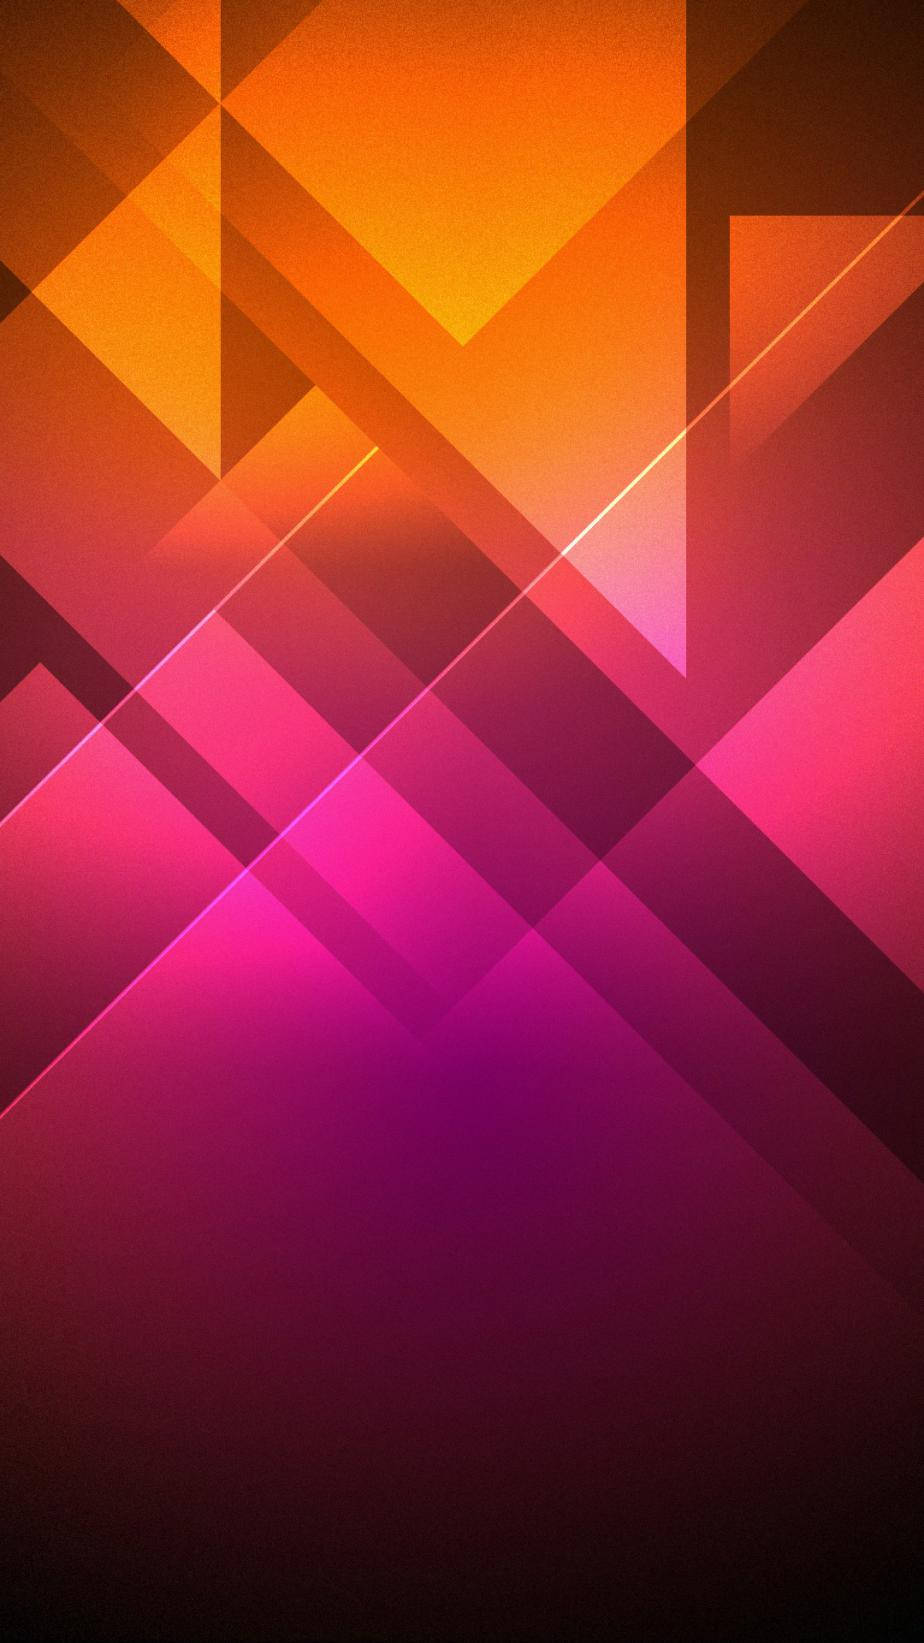 Htc Orange And Pink Geometric Shapes Wallpaper